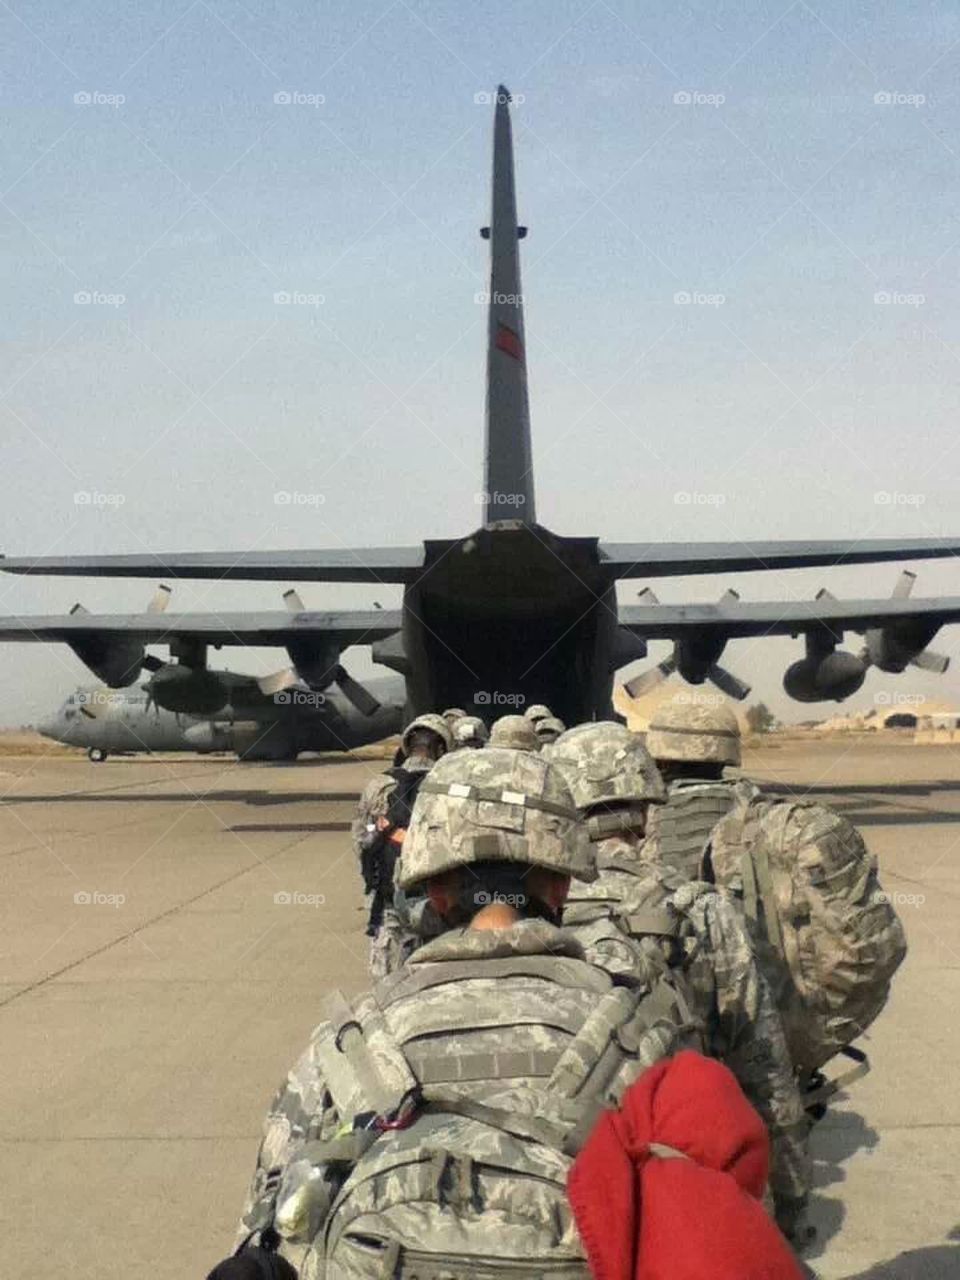 Leaving Iraq